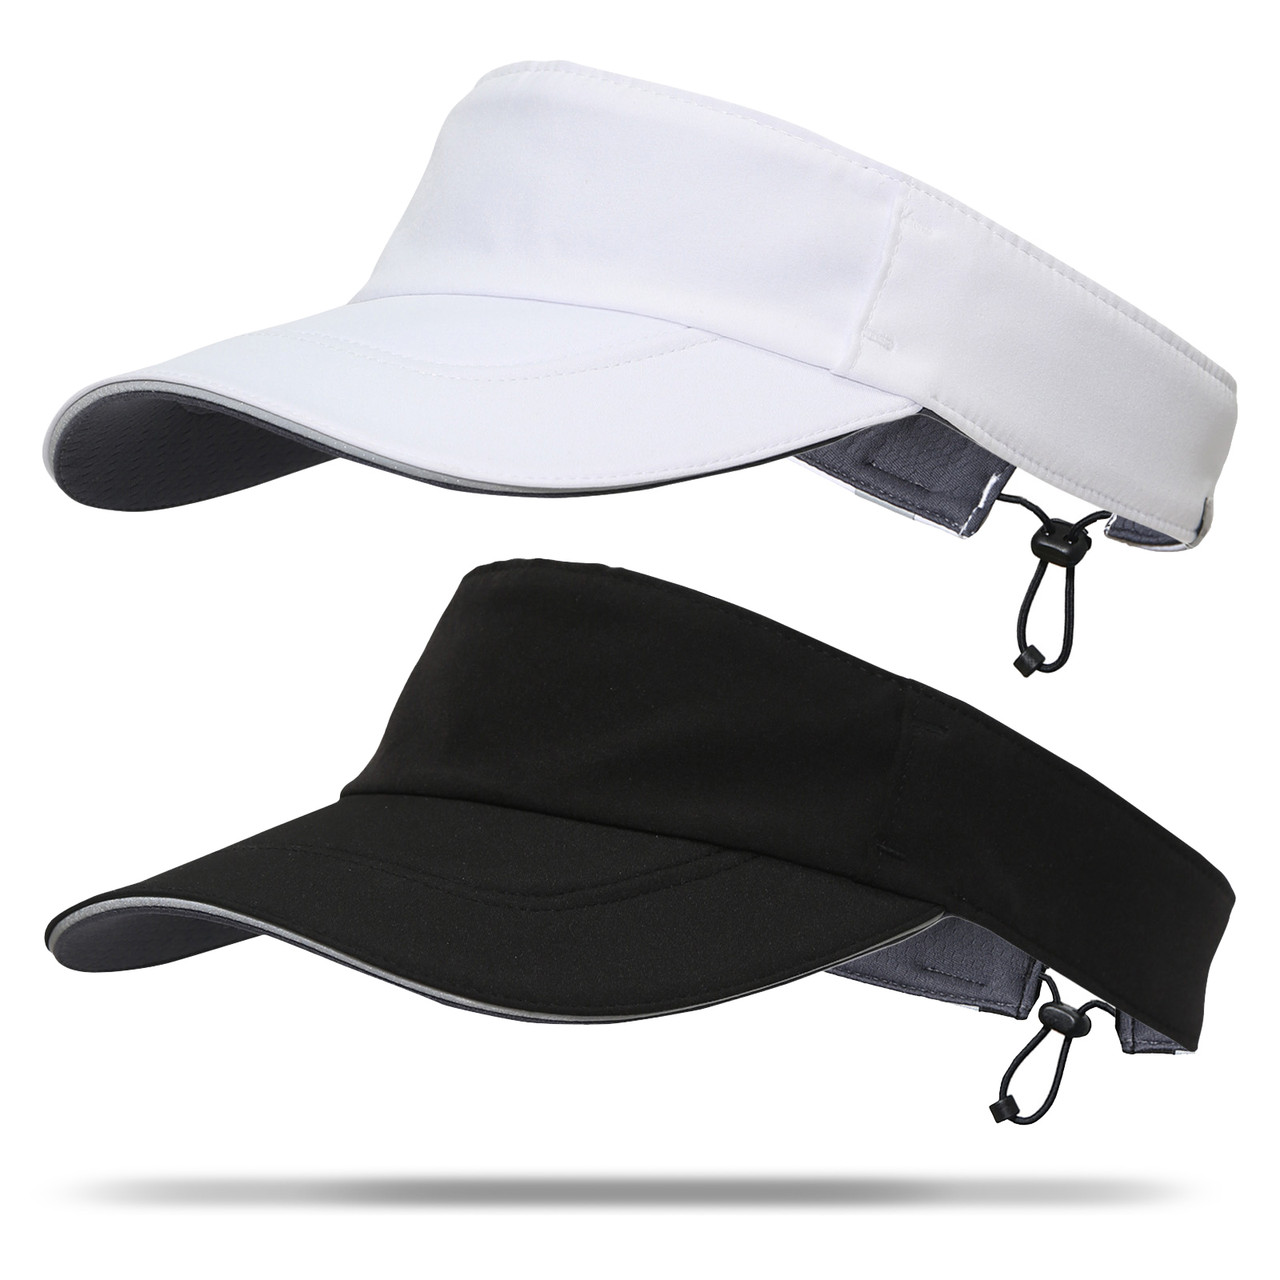 Men's Sun Visor Hat - Traverse Series - 2-pack